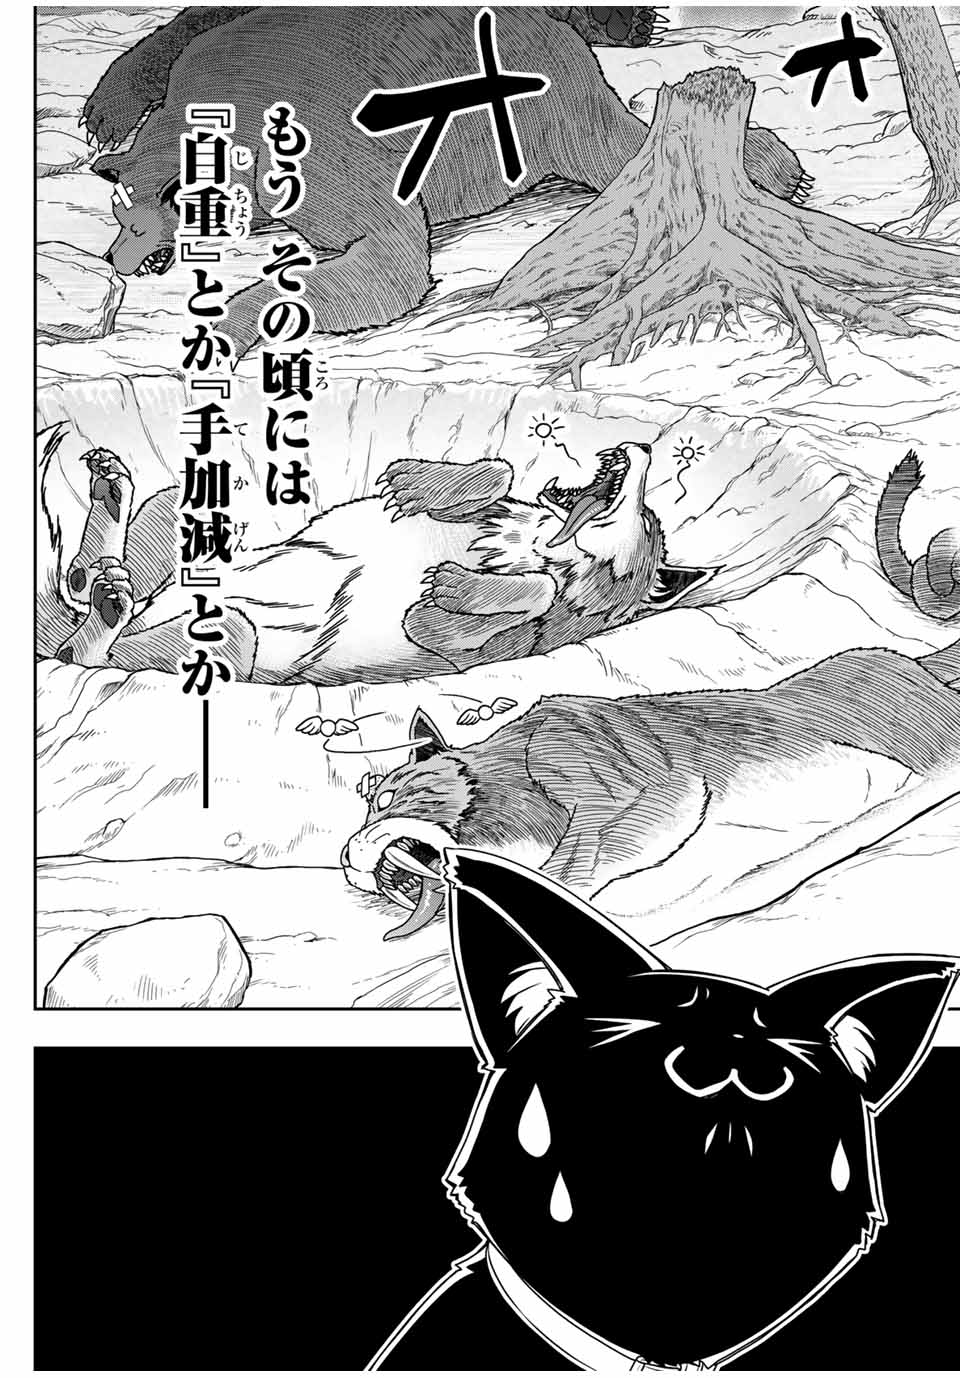 Nengan no Akuyaku Reijou (Last Boss) no Karada wo Teniiretazo!  - Chapter 6 - Page 3